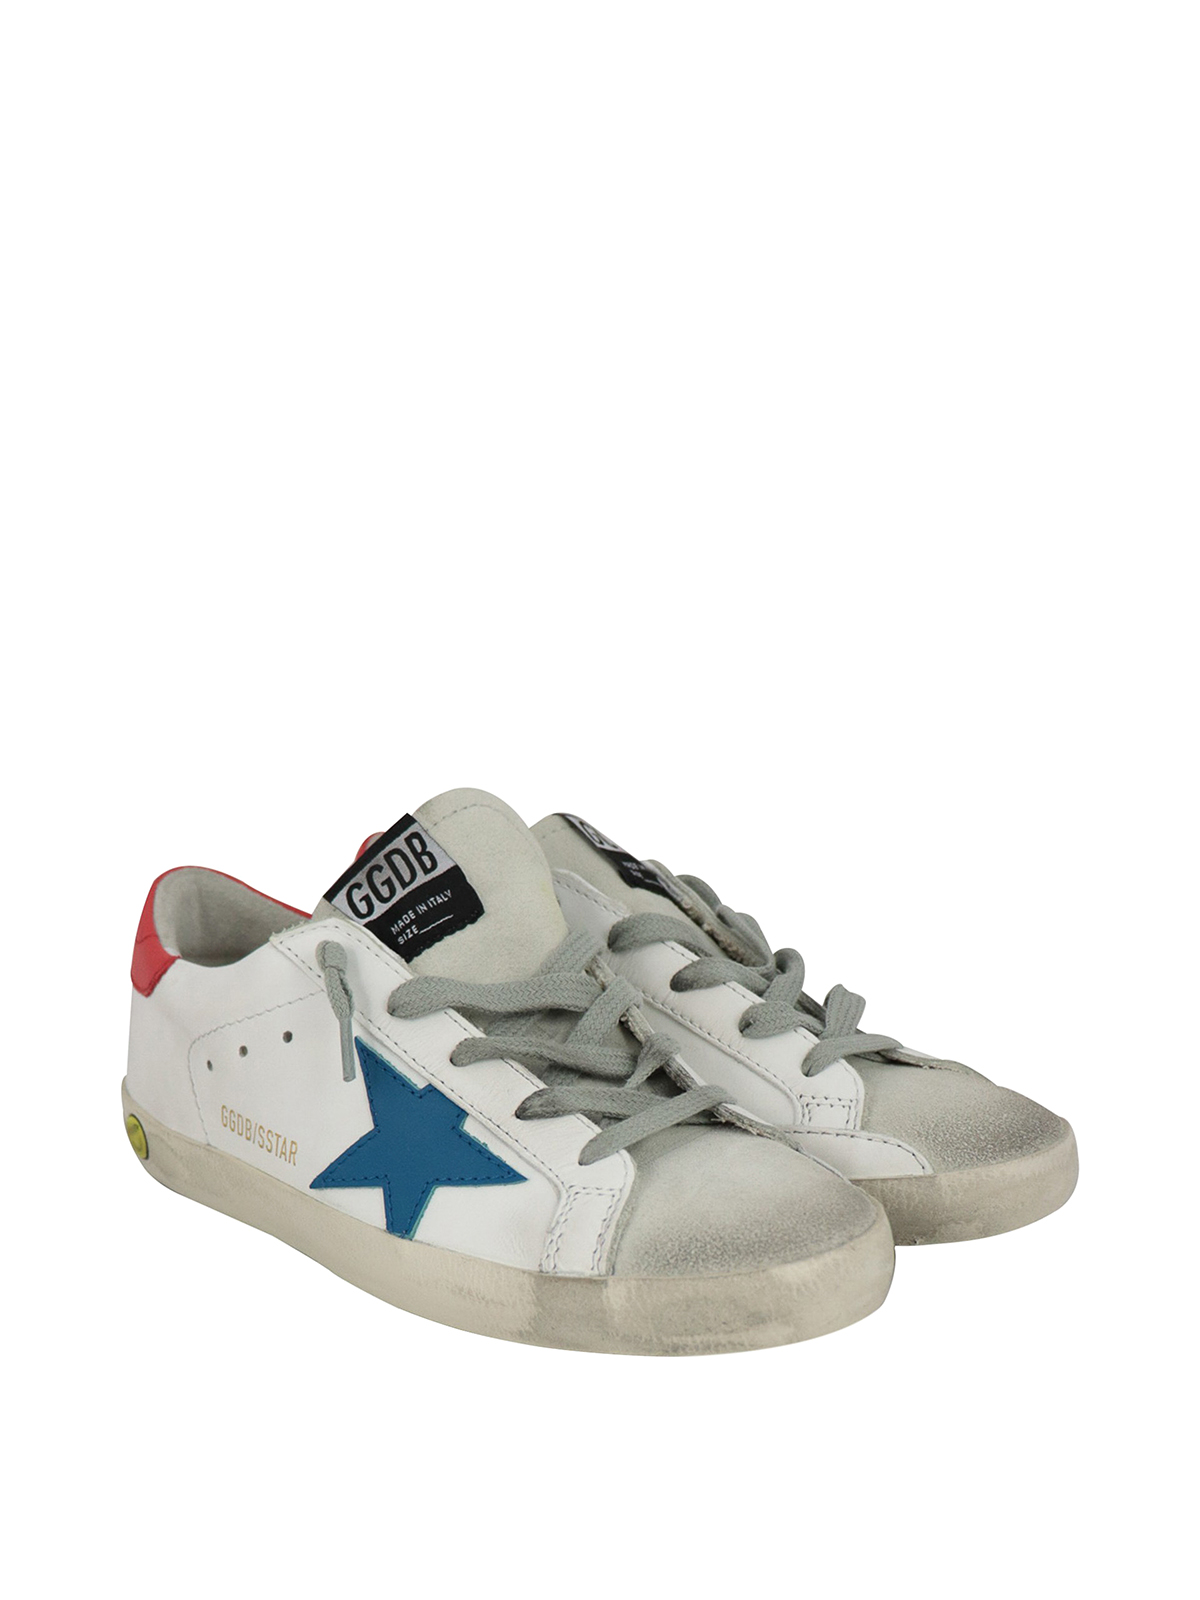 Trainers Golden Goose - Blue star Superstar sneakers - G36KS301B43001